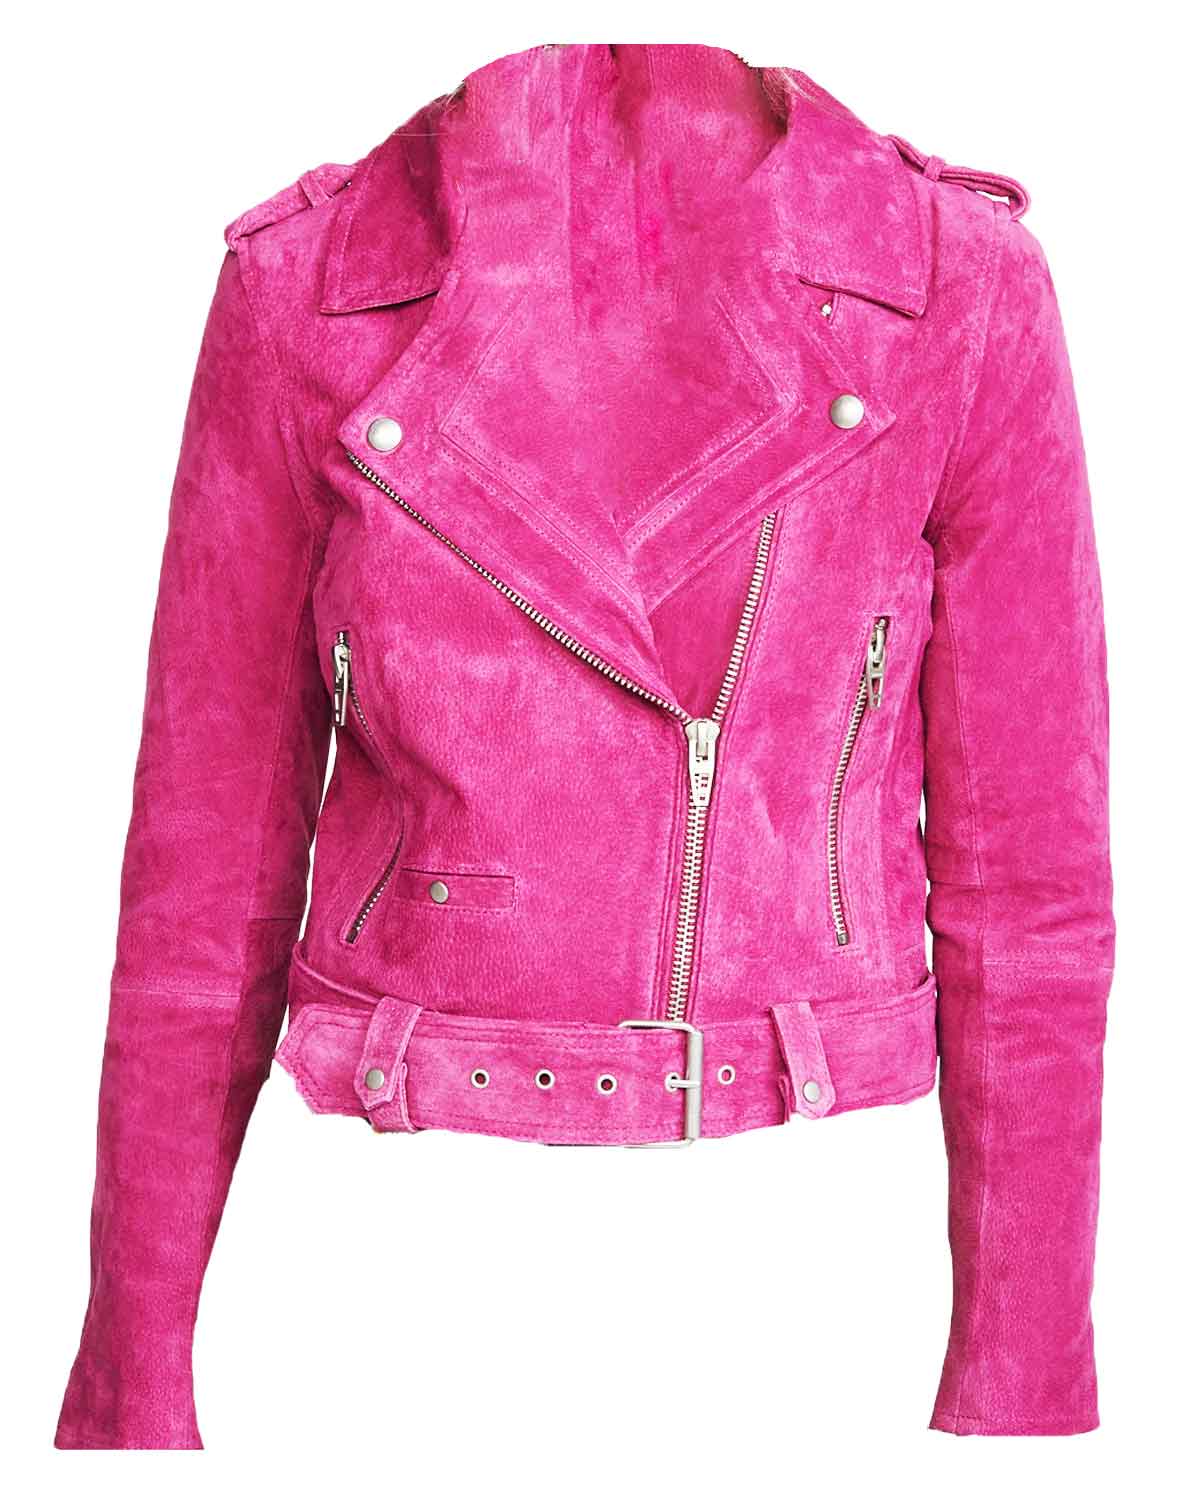 Chucky Lexy Cross Pink Leather Biker Jacket | Elite Jacket